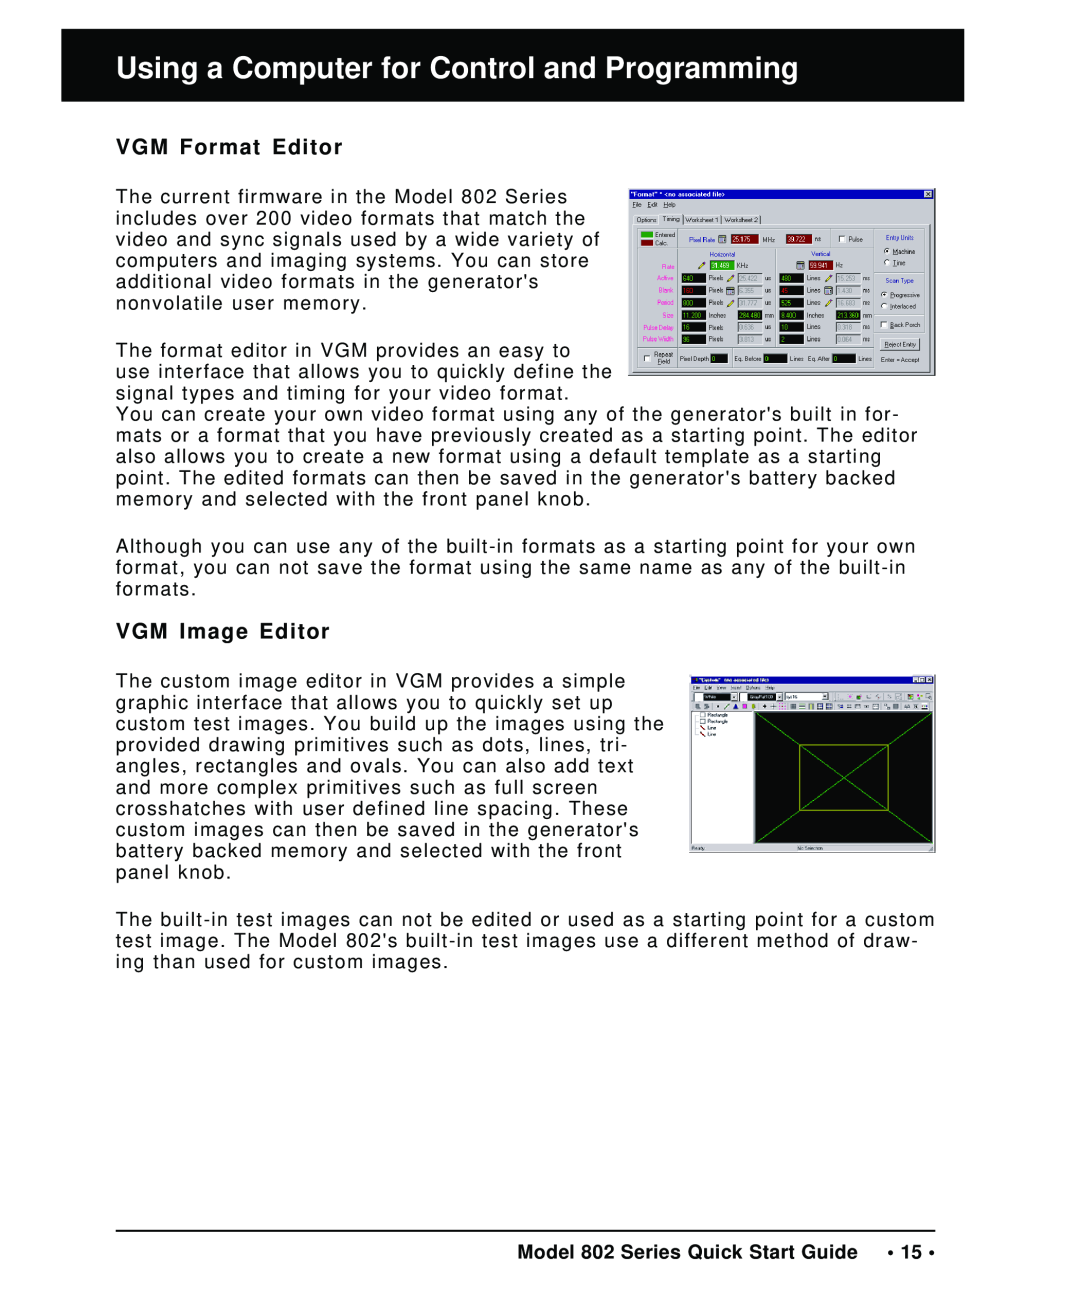 Quantum Data quick start VGM Format Editor, VGM Image Editor, Model 802 Series Quick Start Guide 